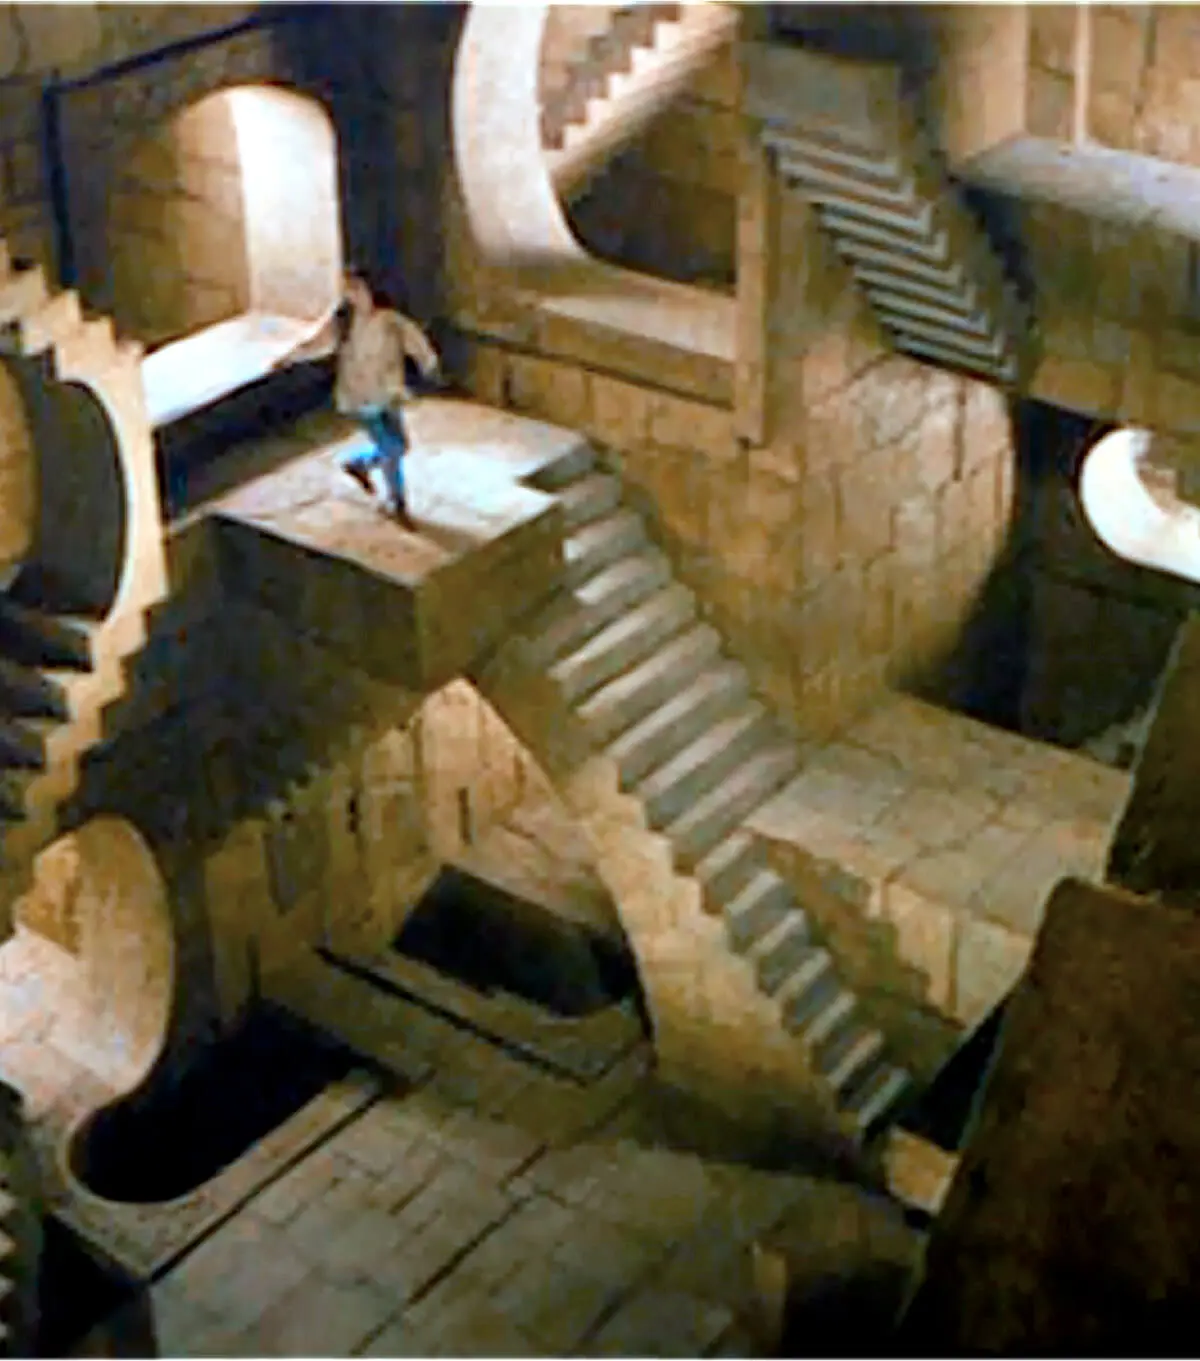 Sarah arrives in 'the Escher' Room in Jareth's Castle.